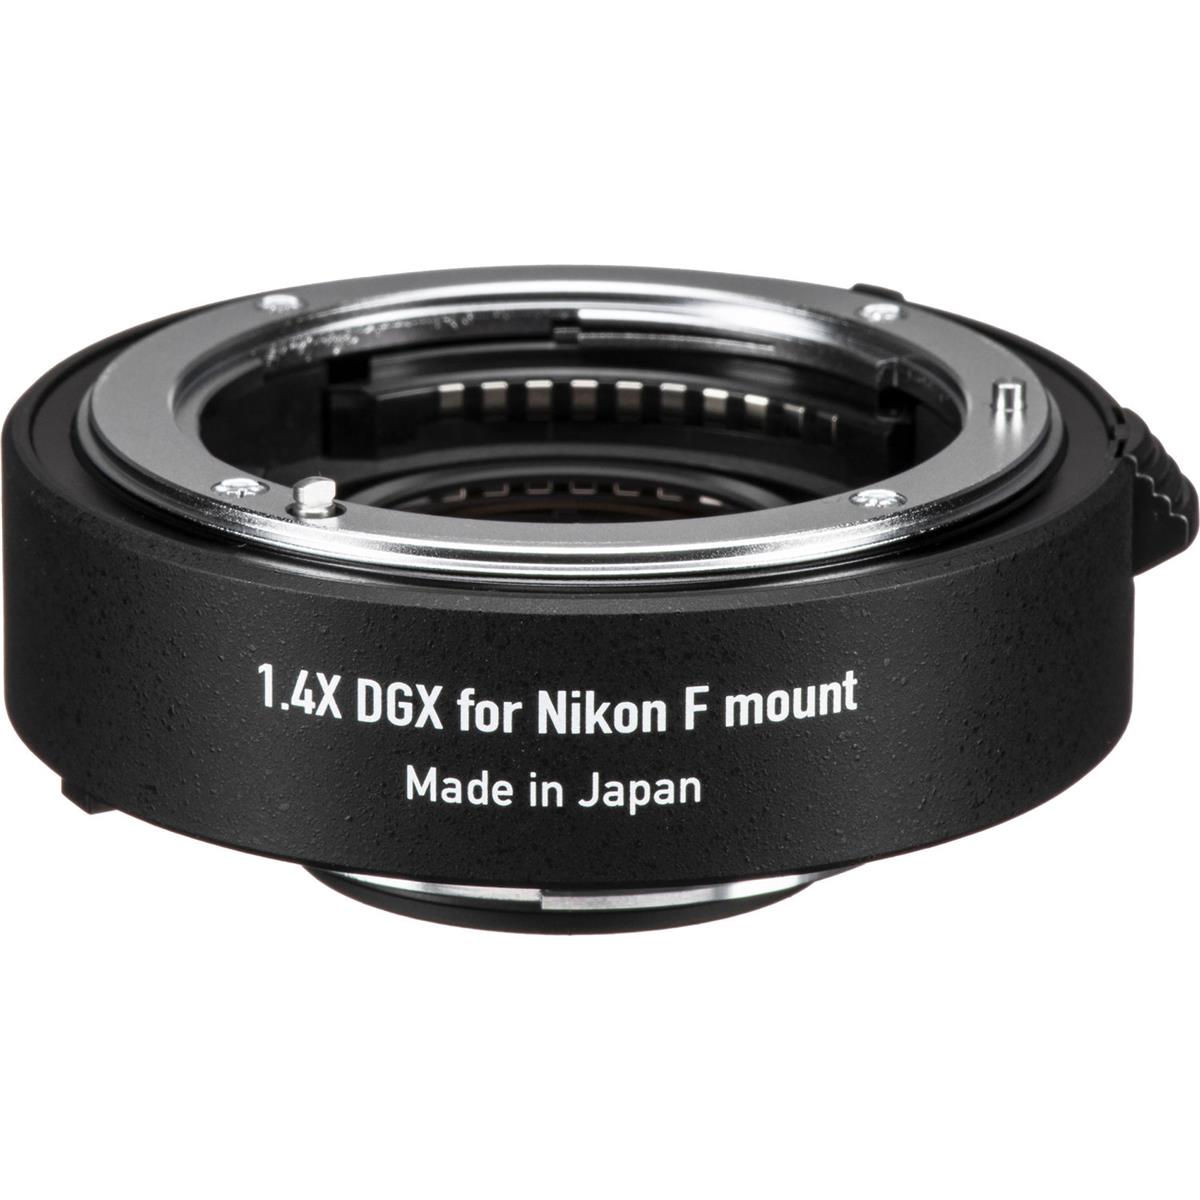 Image of Kenko TELEPLUS HD pro 1.4x DGX Teleconverter for Nikon F Mount